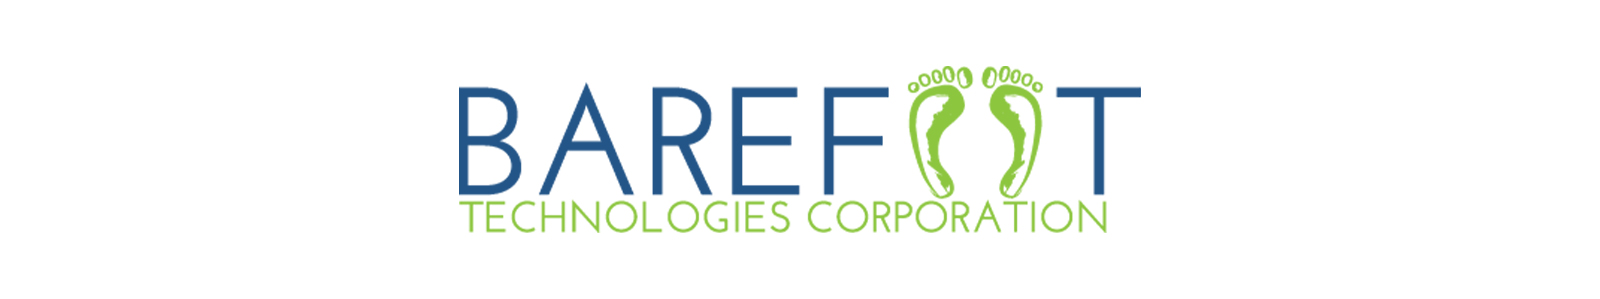 barefoot Technologies logo